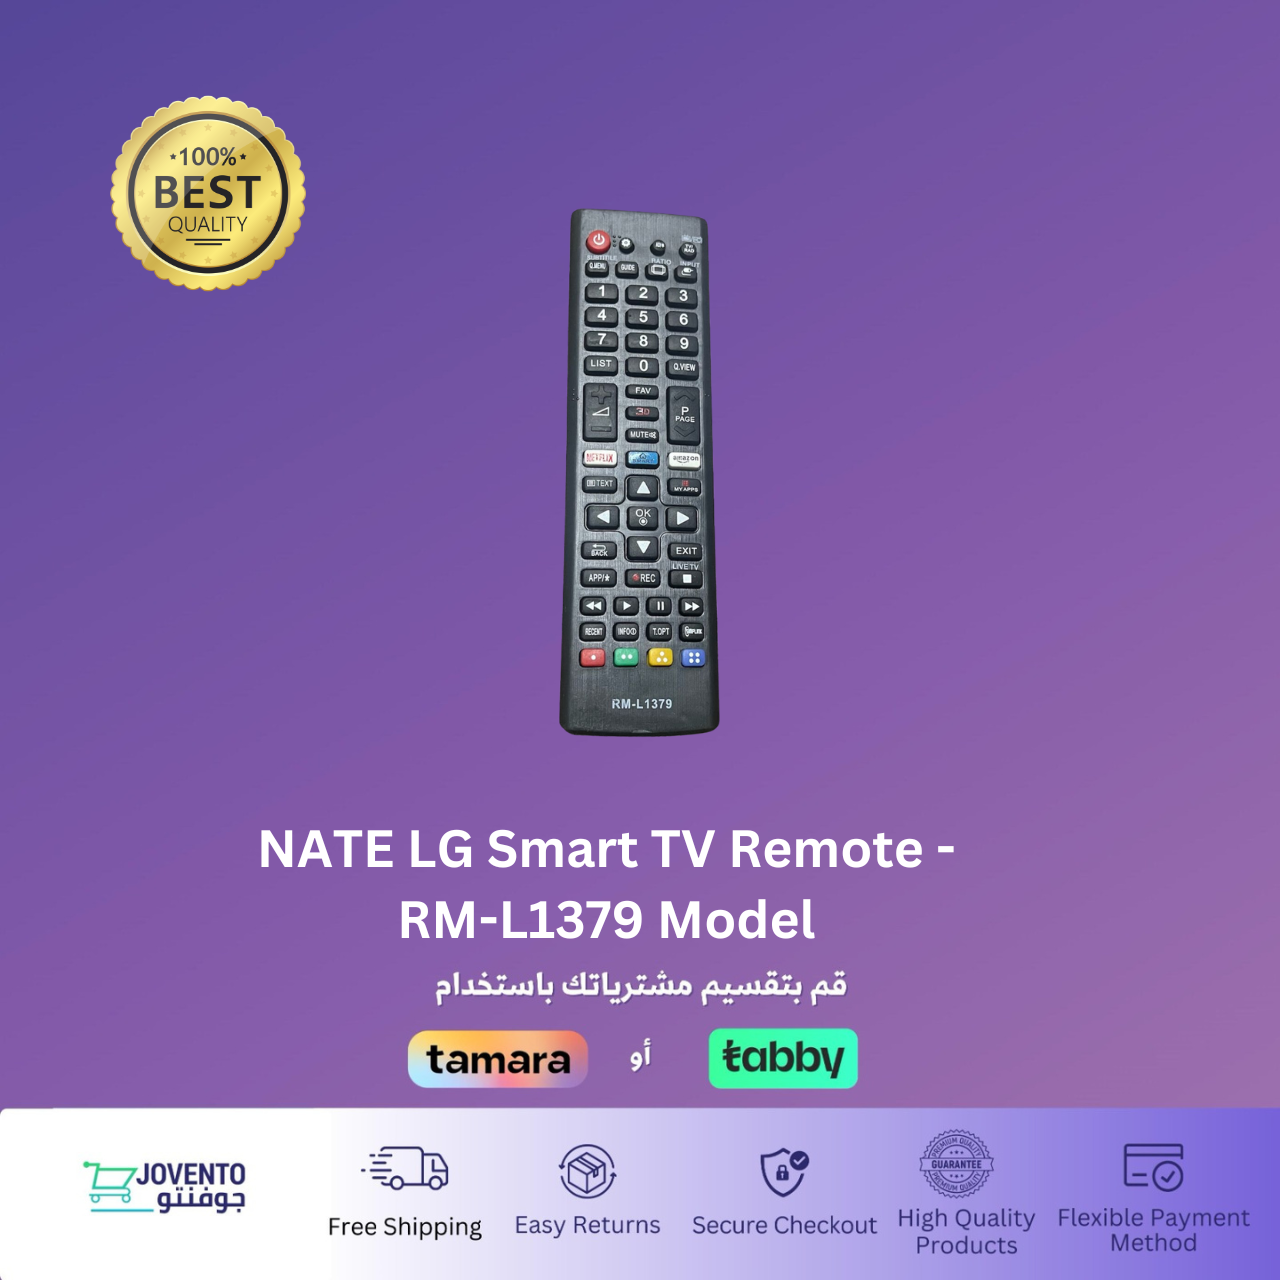 NATE LG Smart TV Remote - RM-L1379 Model